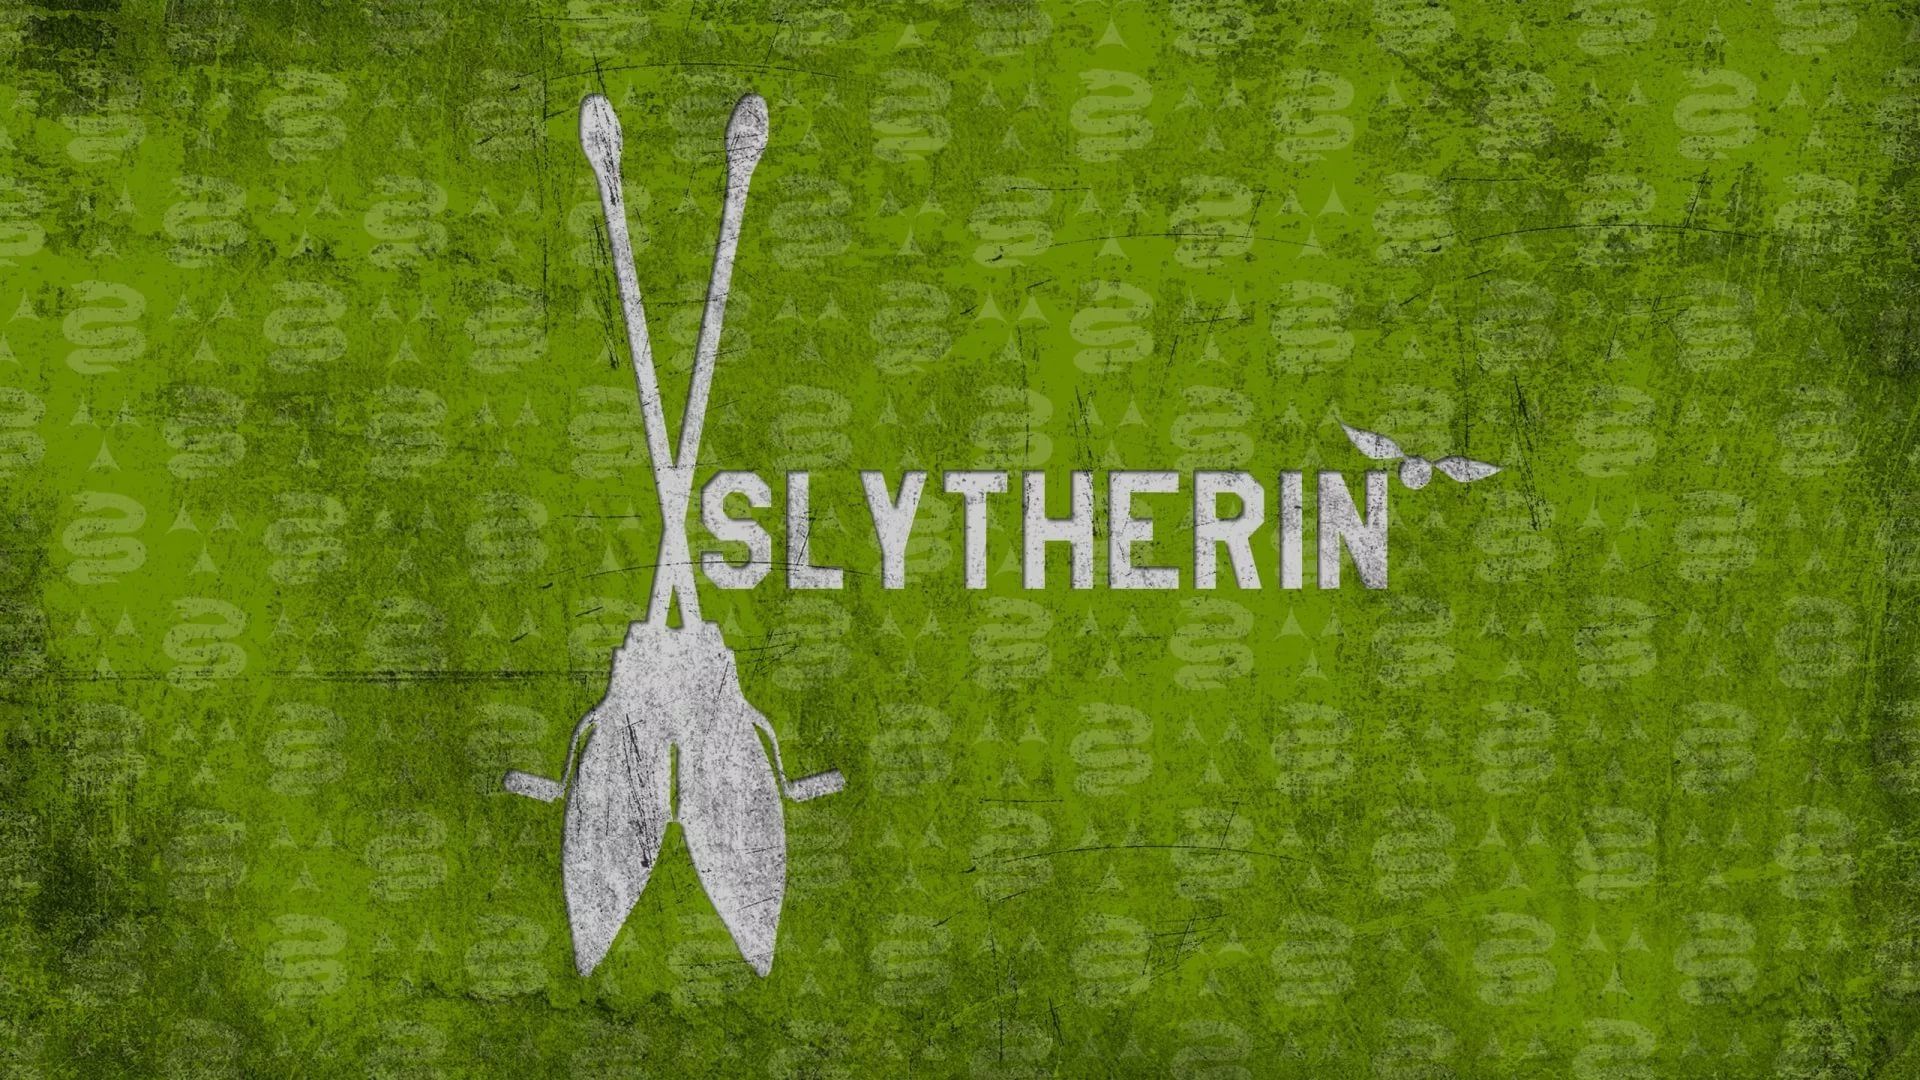 Slytherin computer wallpaper